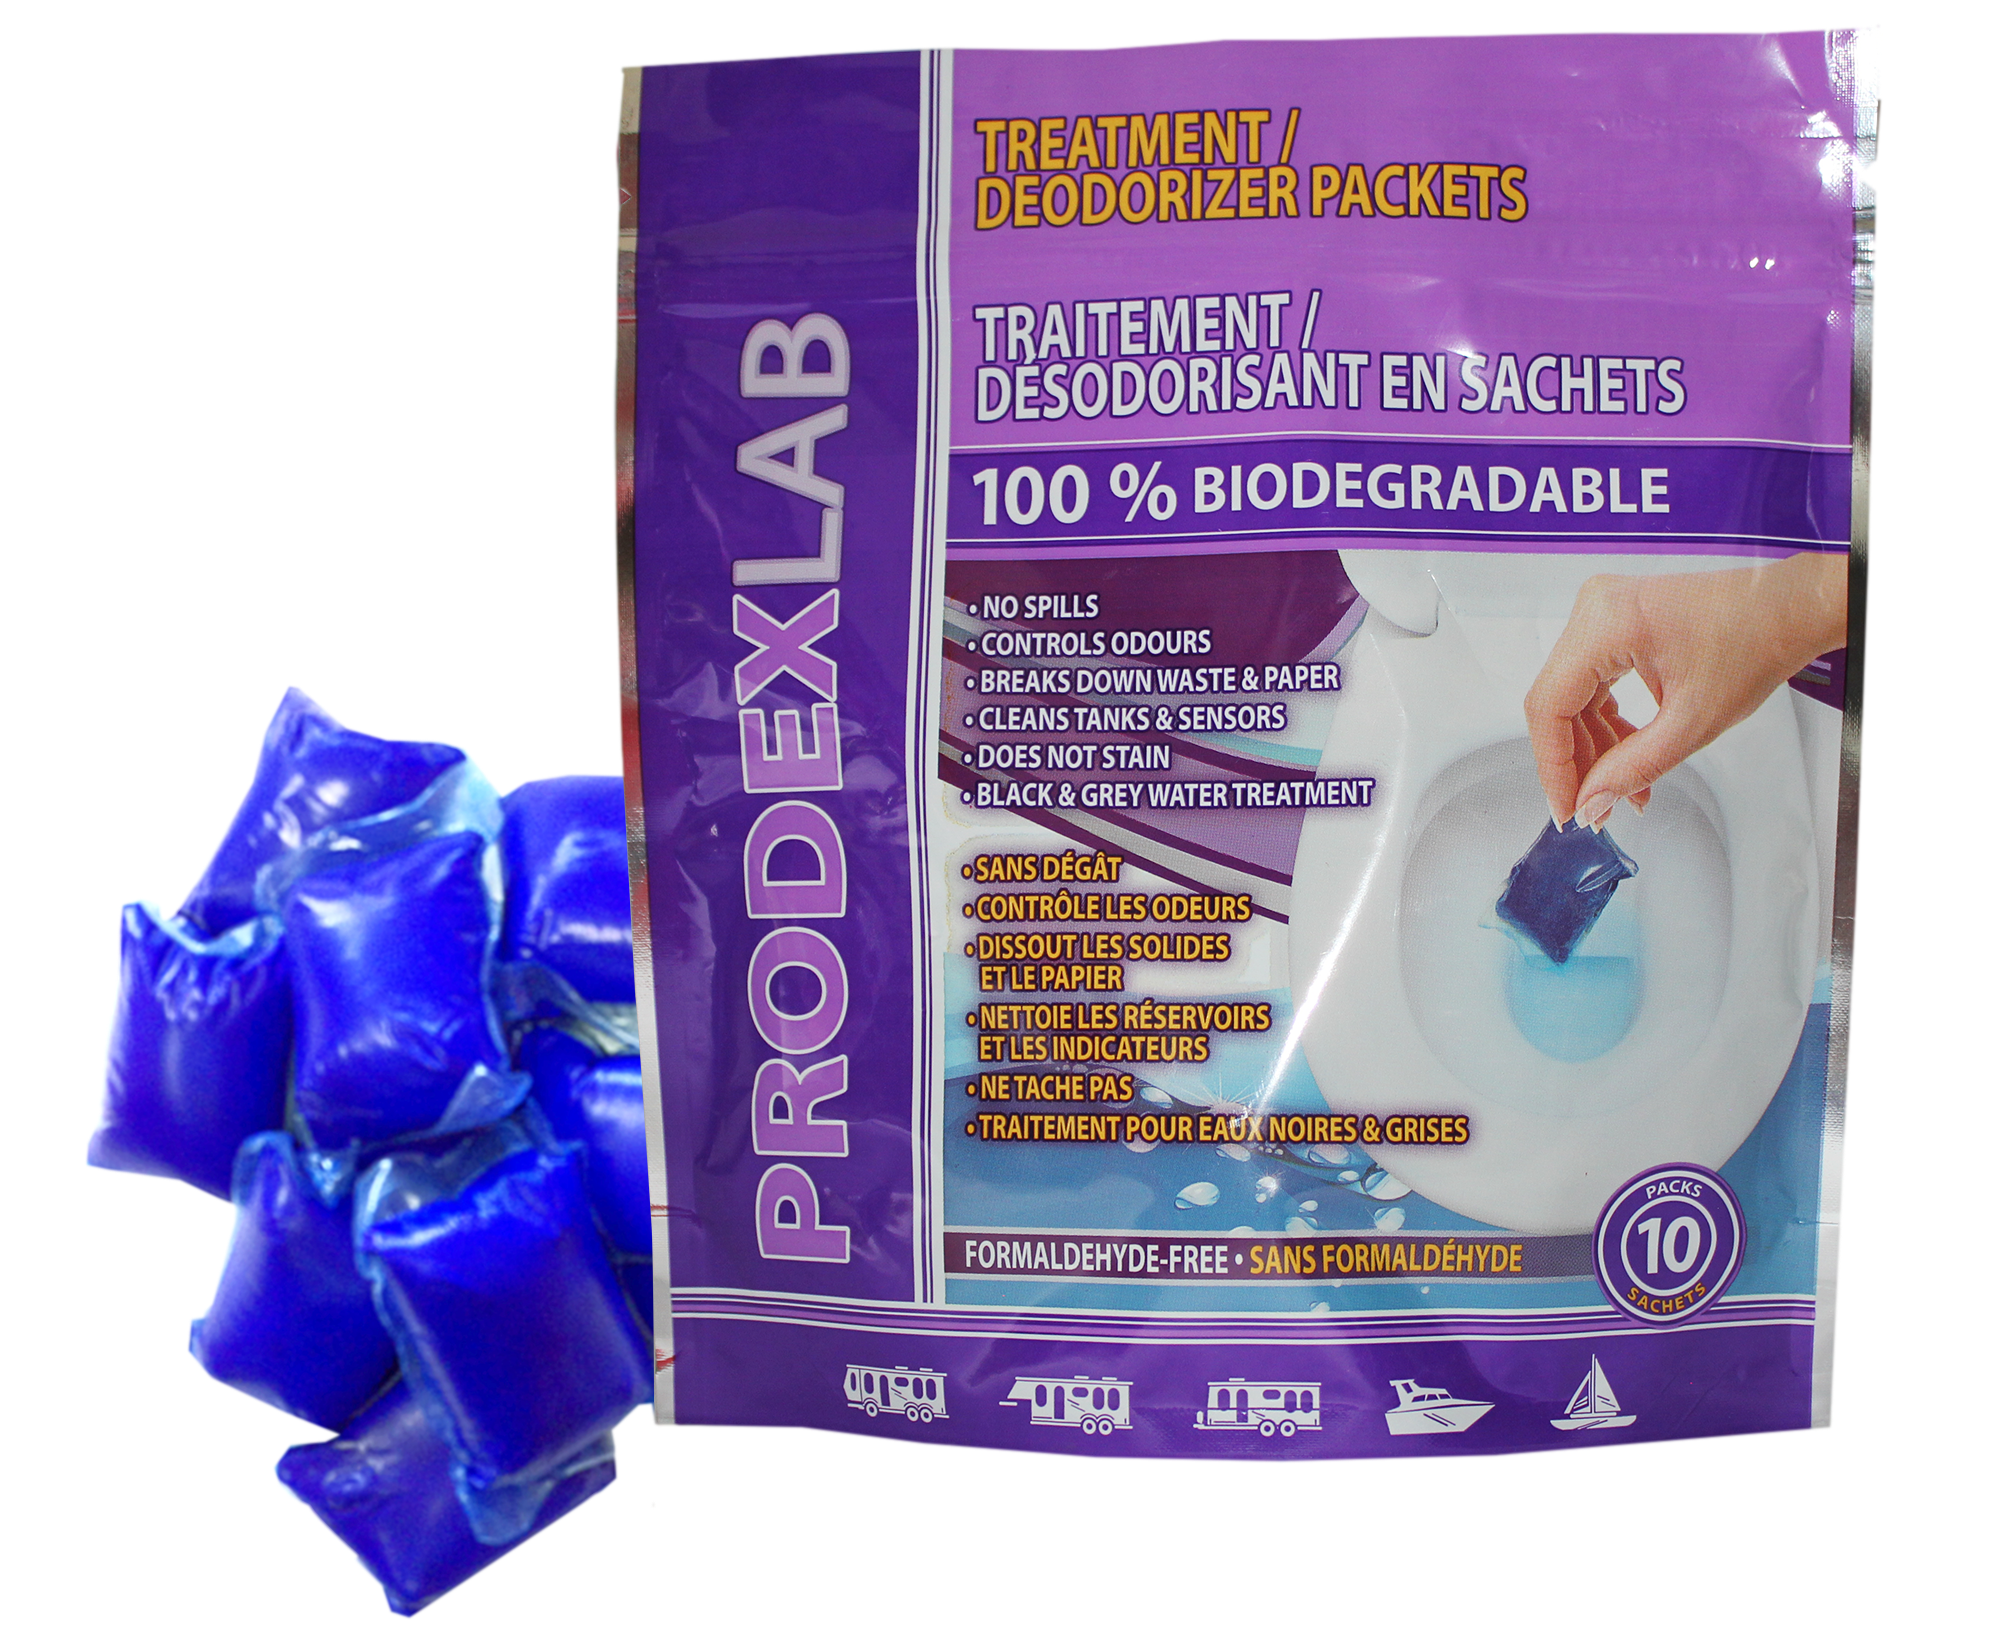 Treatment / Deodorizer Packets